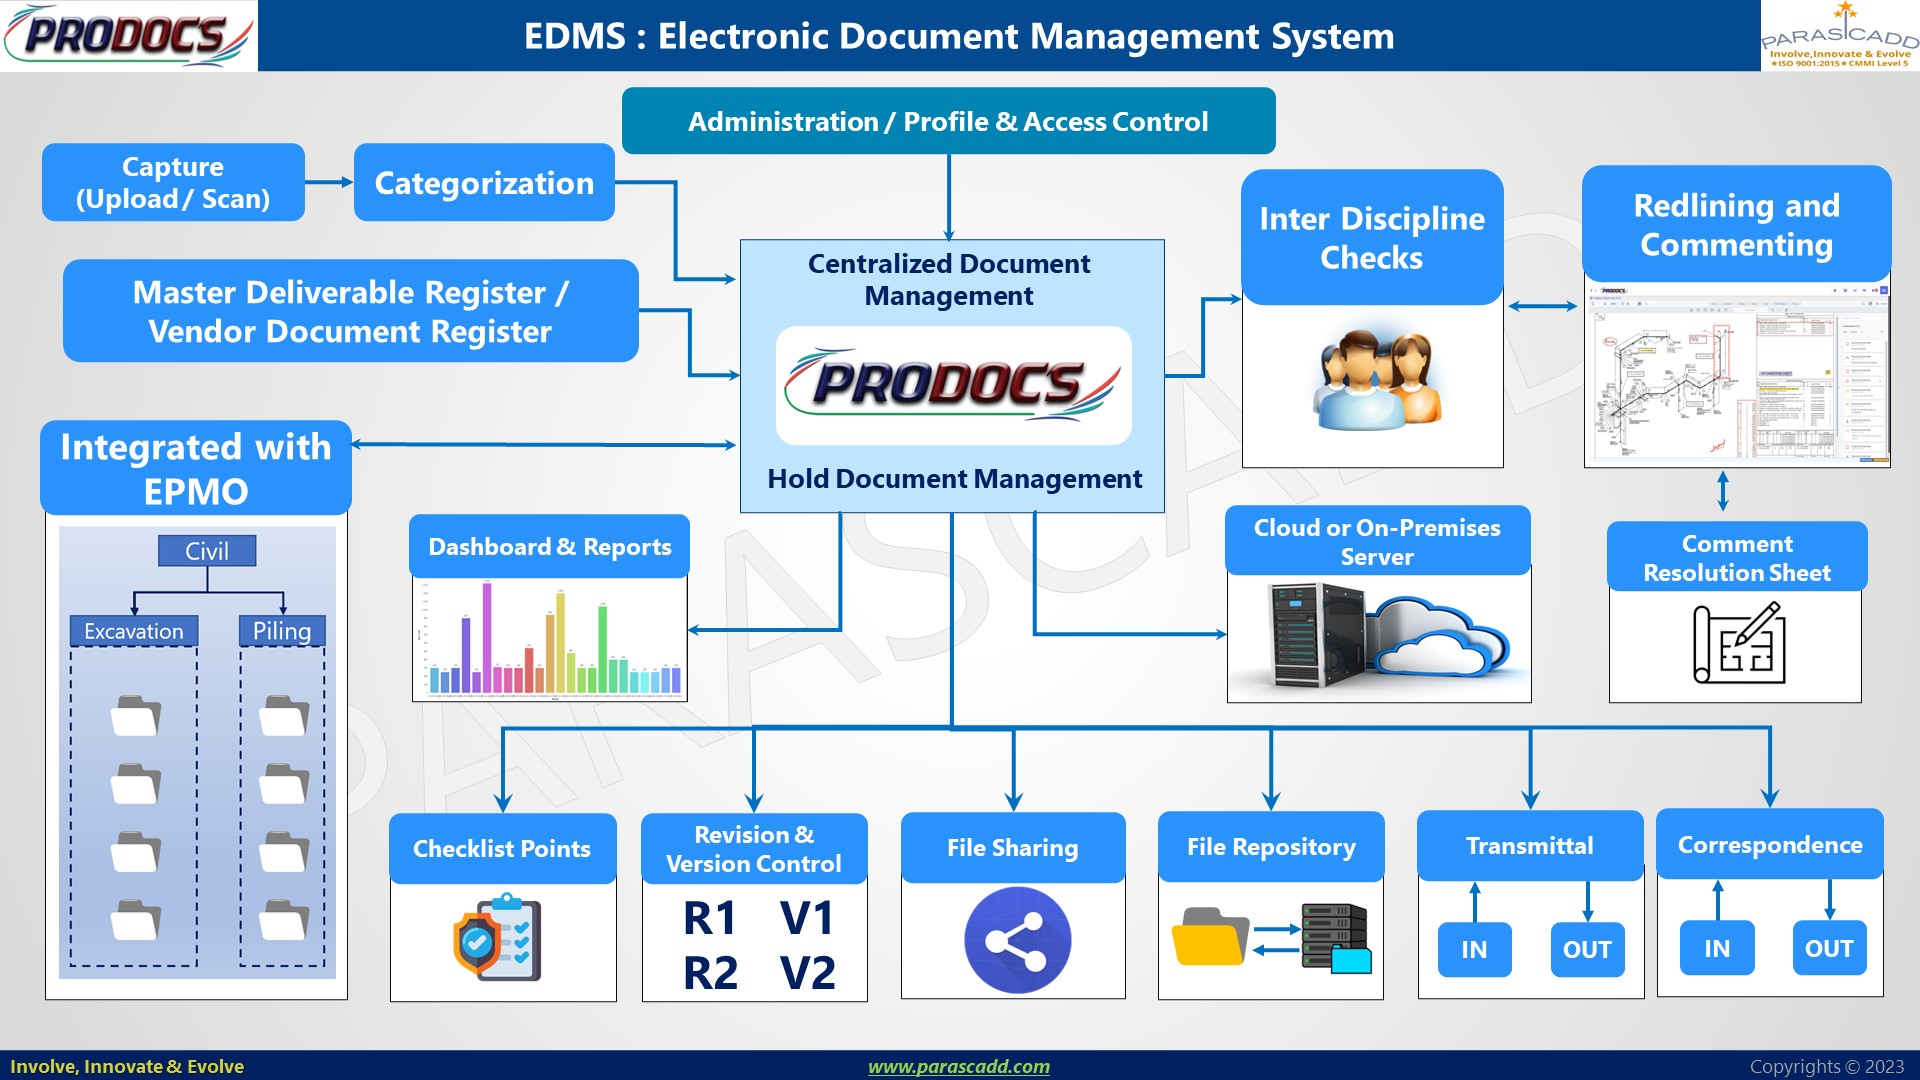 Advanced Document Management System - EBA DMS